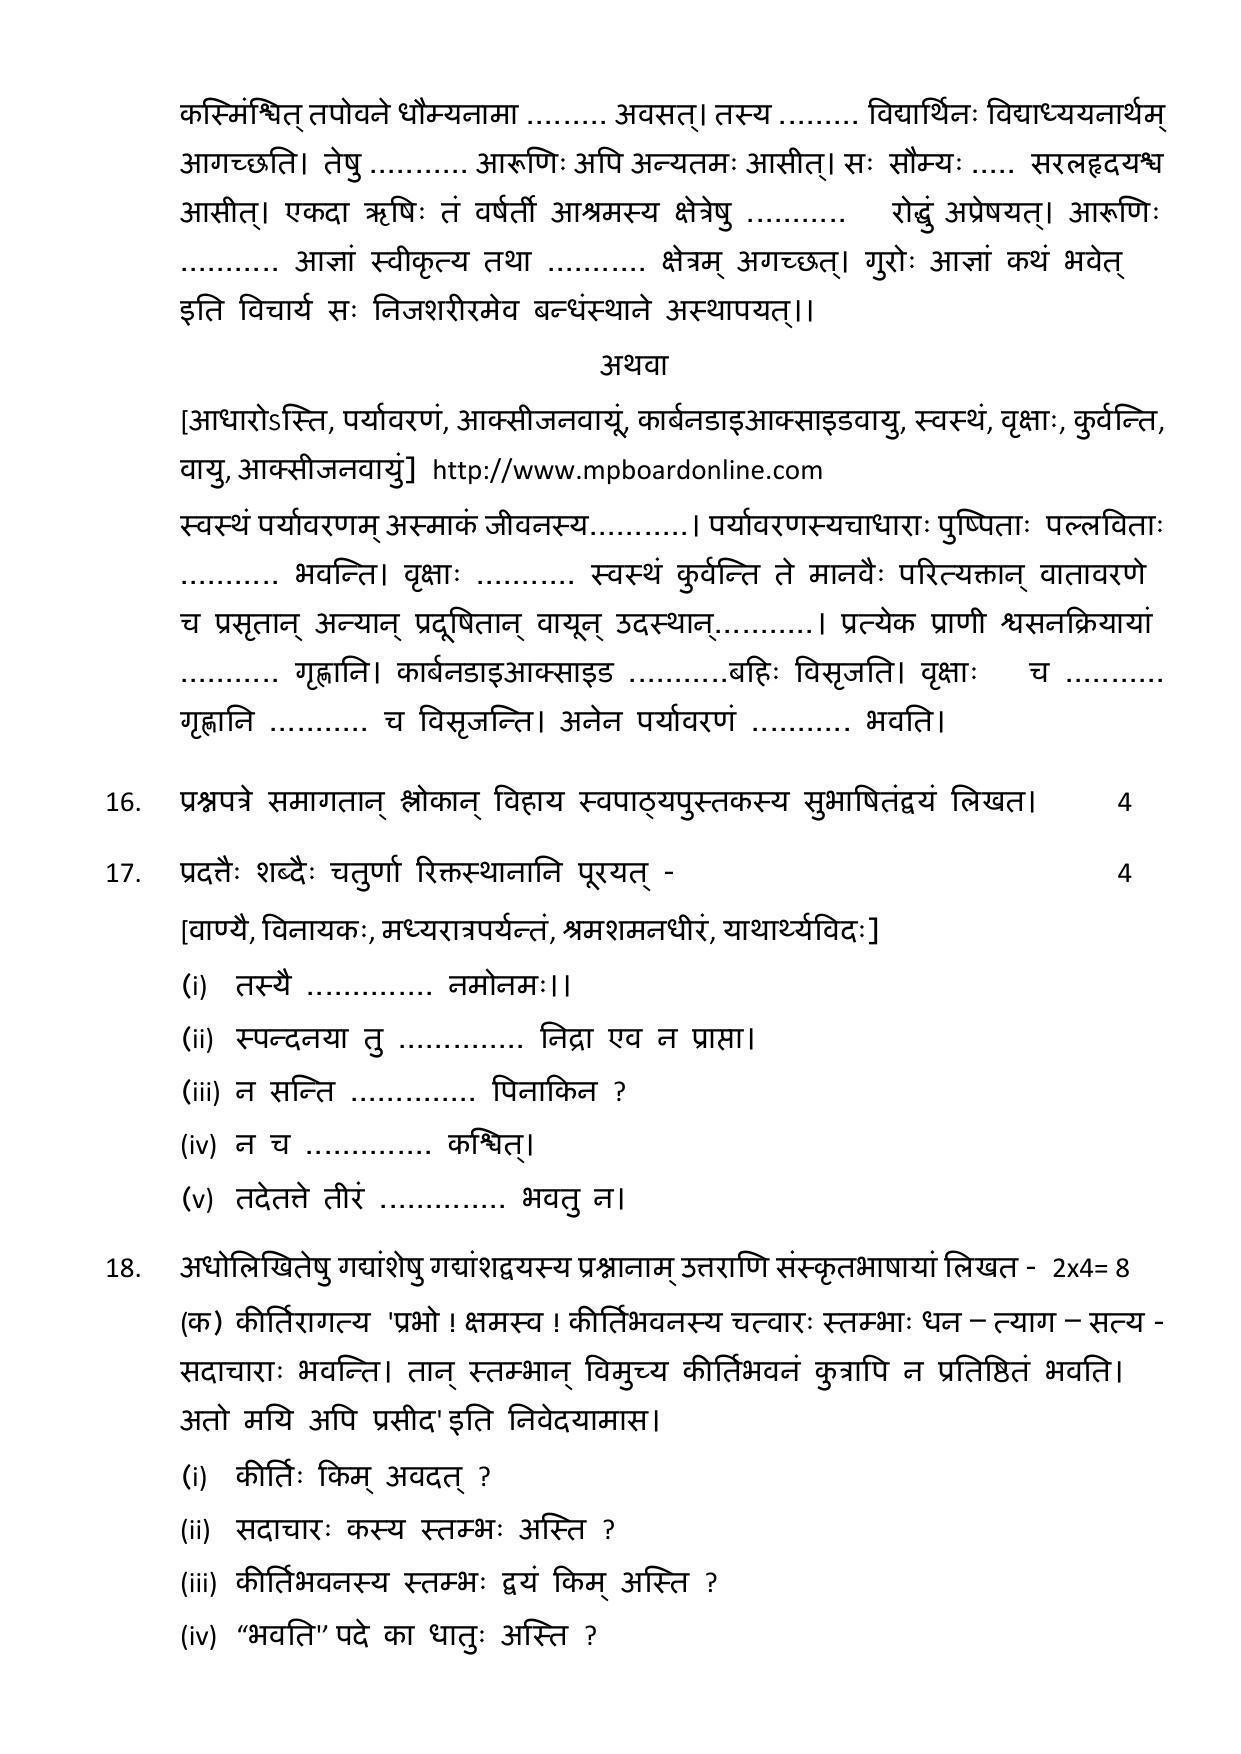 MP Board Class 12 Sanskrit 2019 Question Paper - Page 6